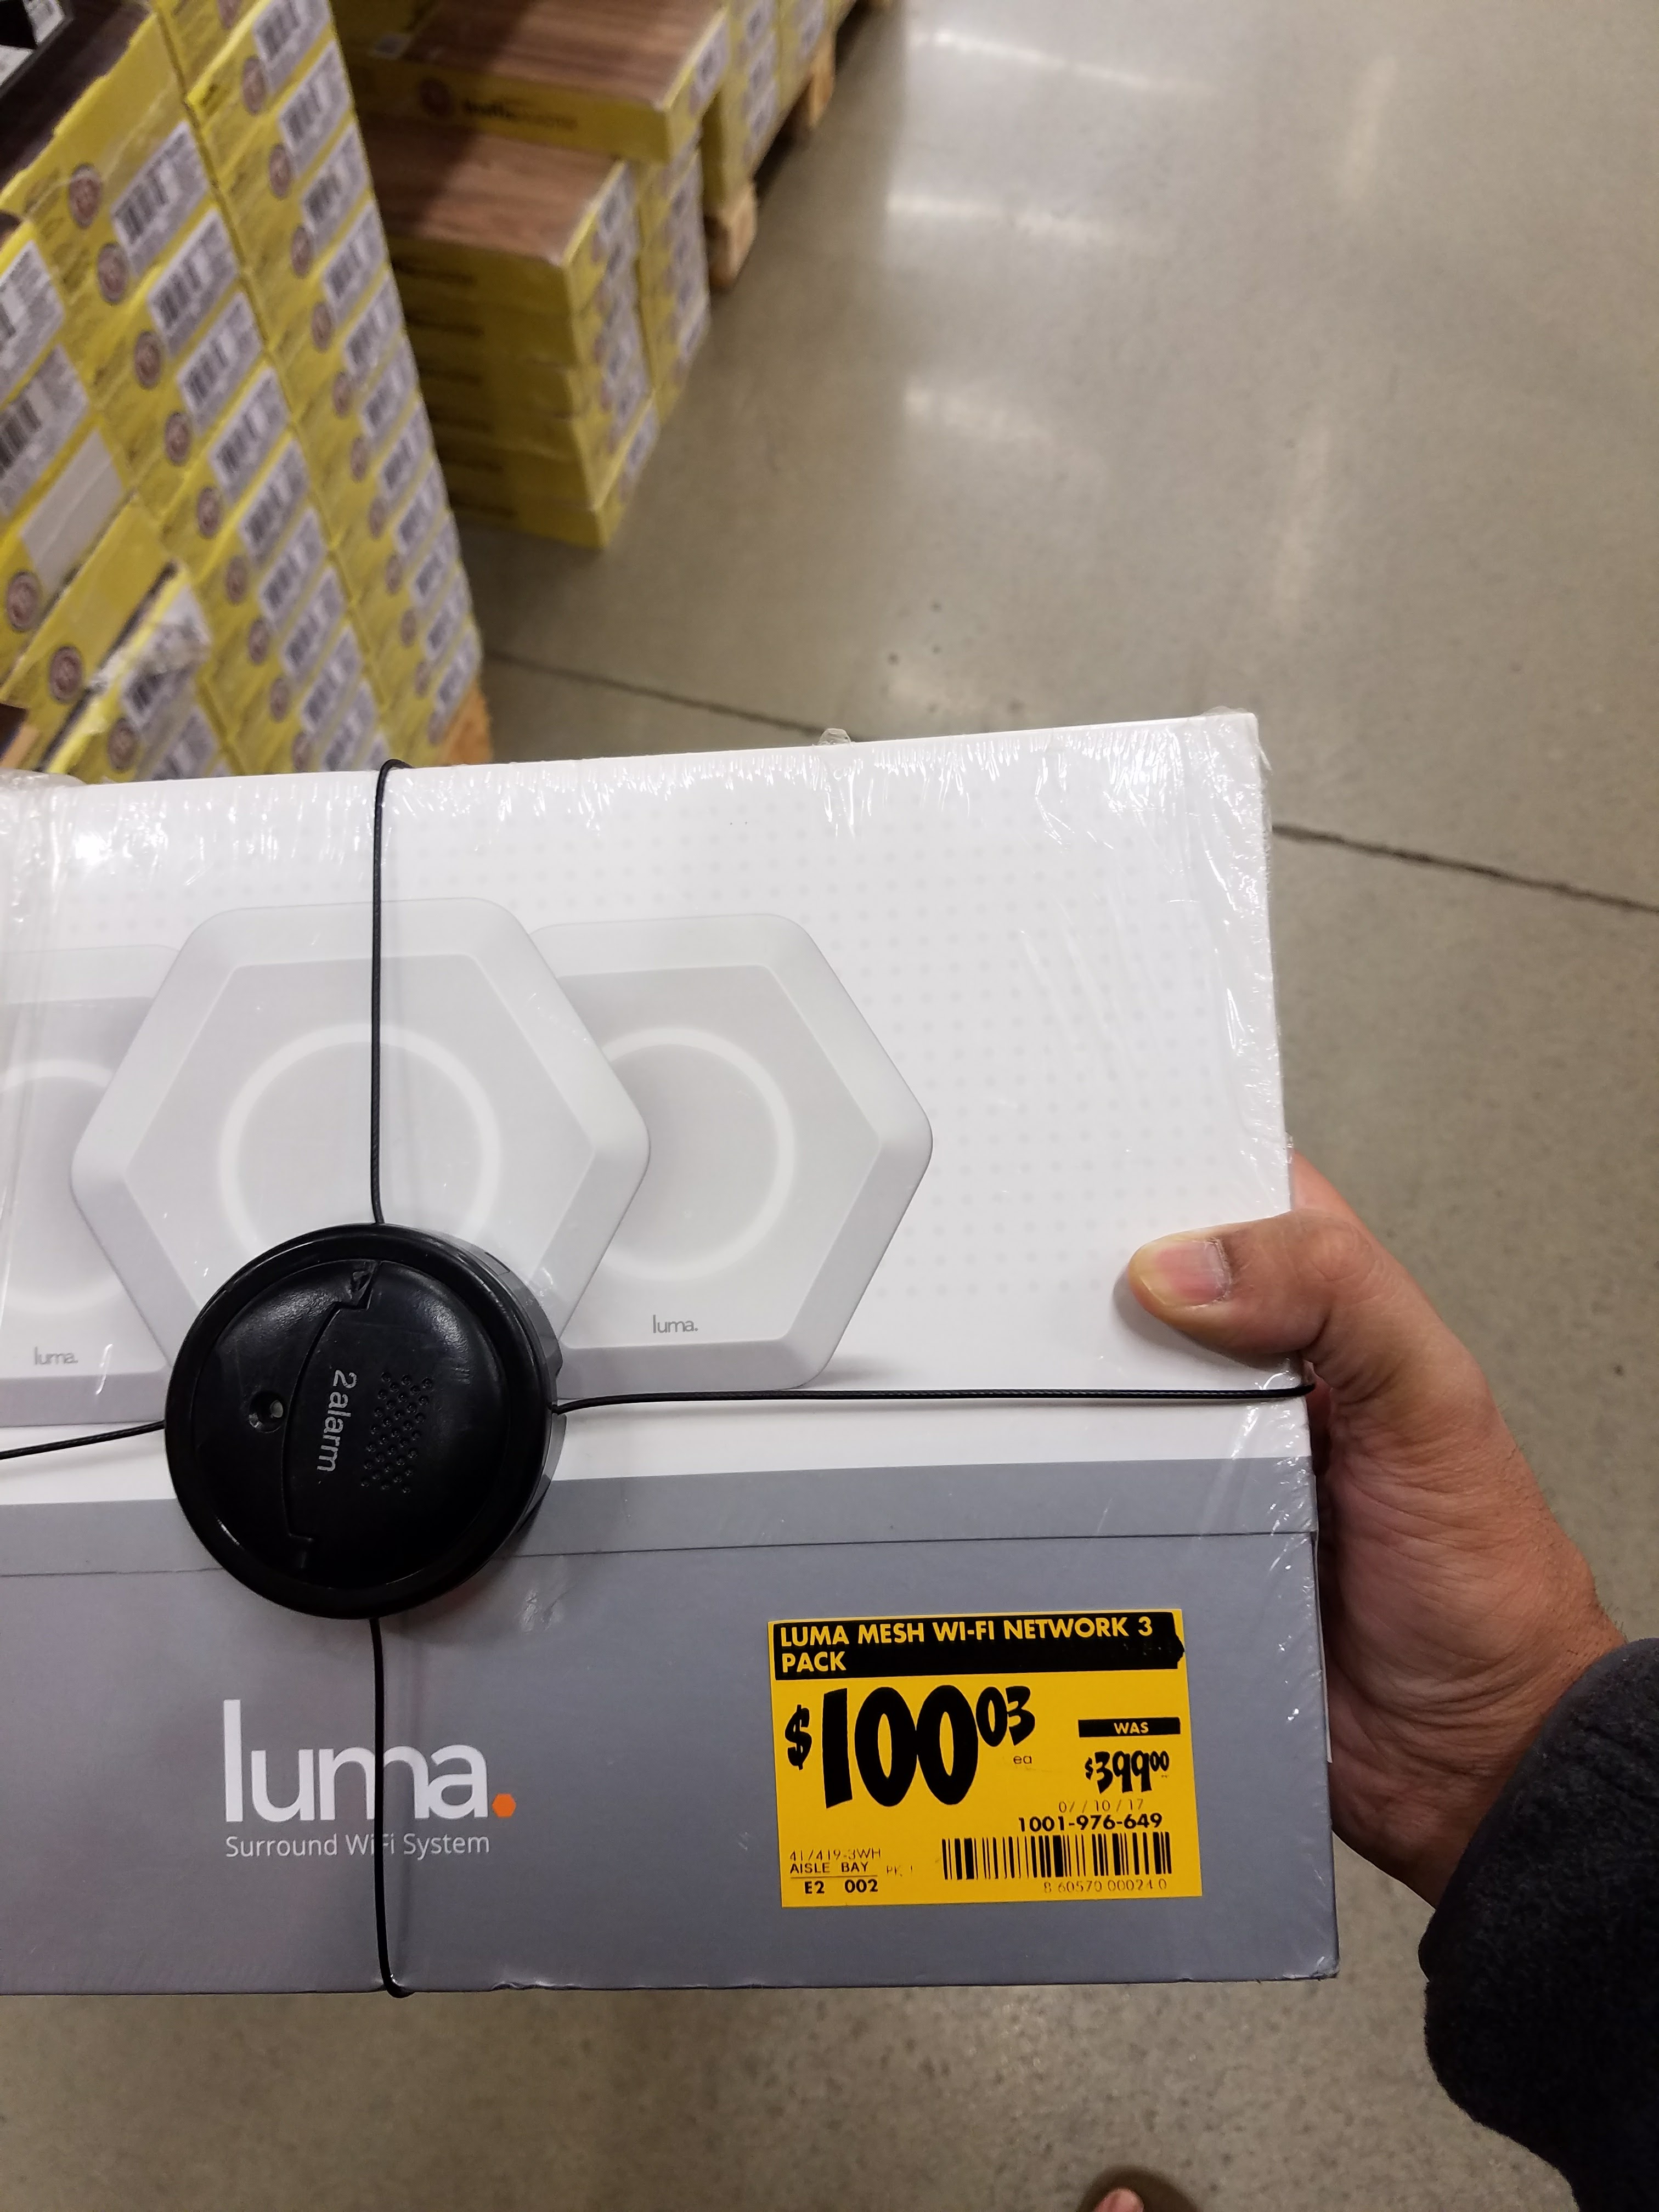 Luma Intelligent Home Wifi Clearance $100 03 YMMV Home Depot